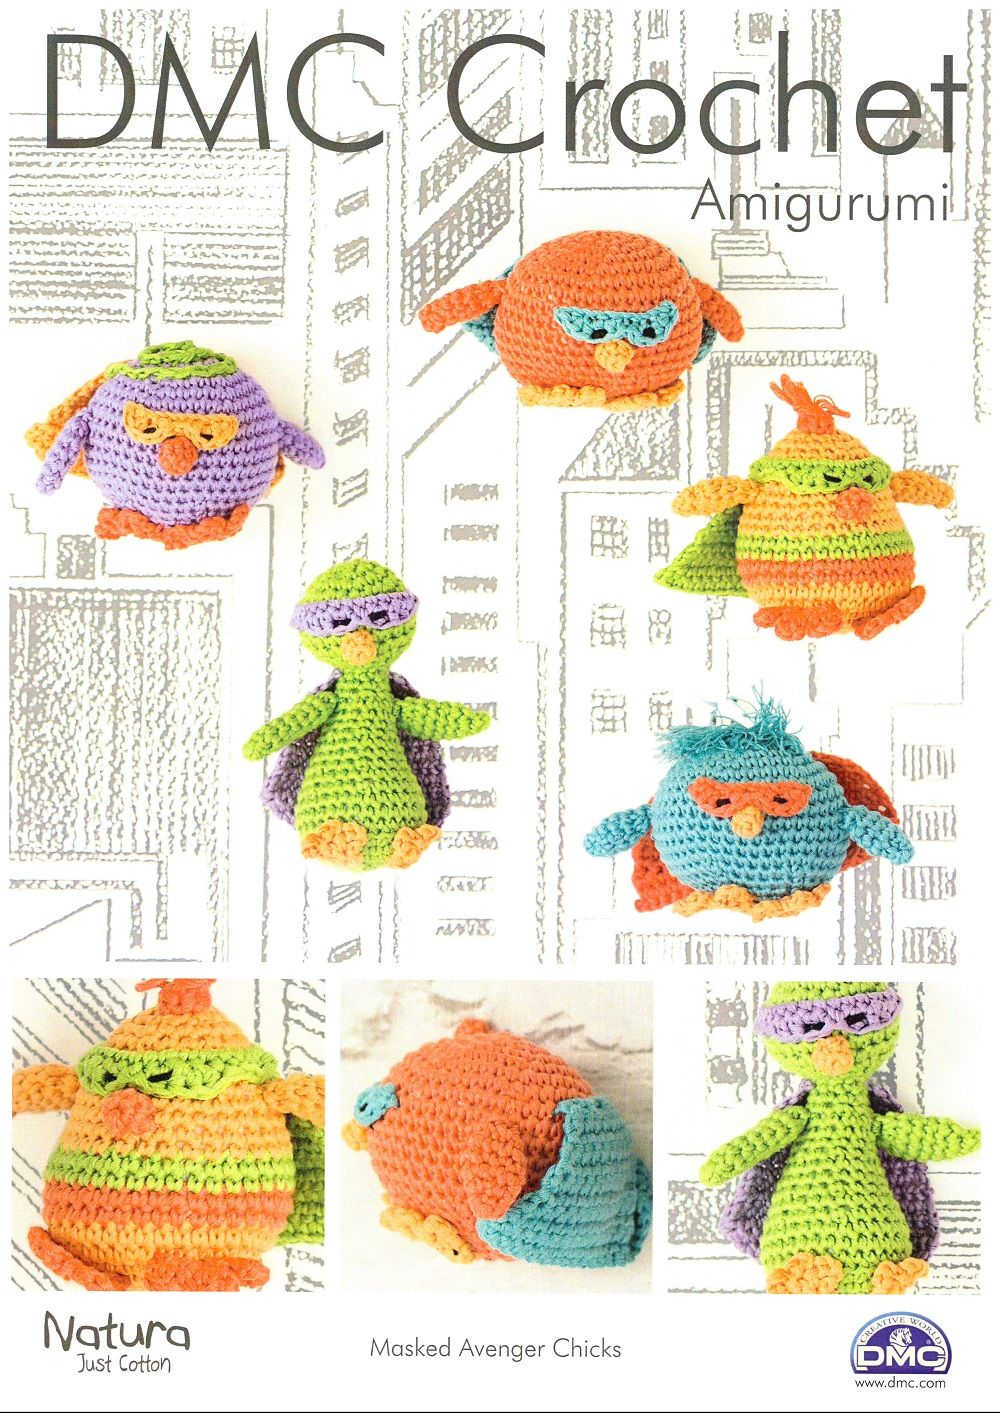 Amigurumi Crochet Patterns Dmc Masked Avenger Chicks Amigurumi Crochet Pattern In Natura